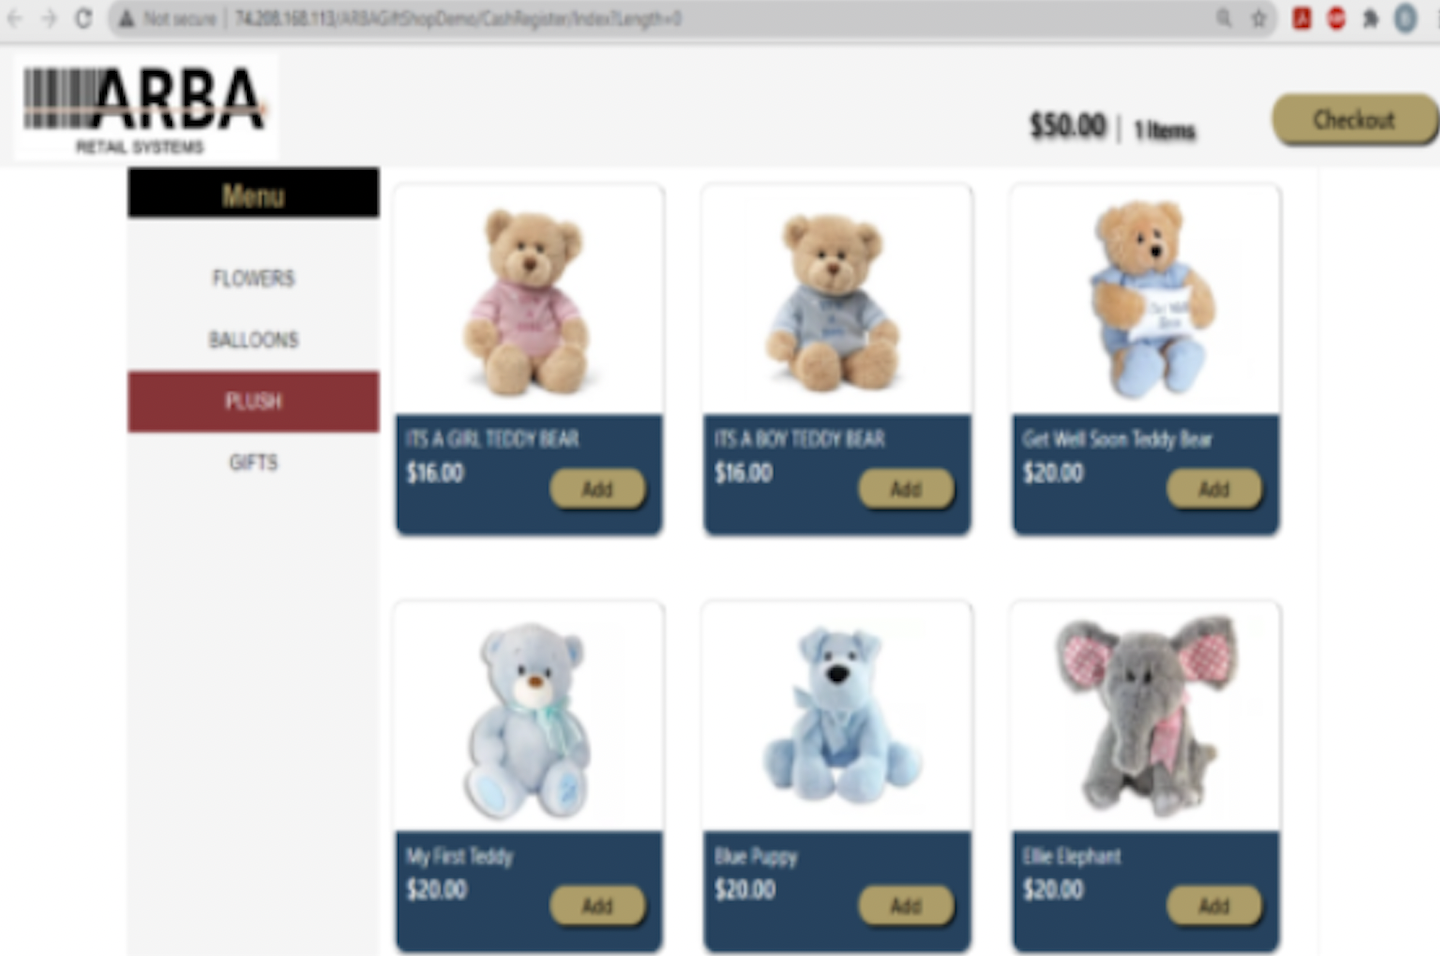 ARBA POS online ordering store